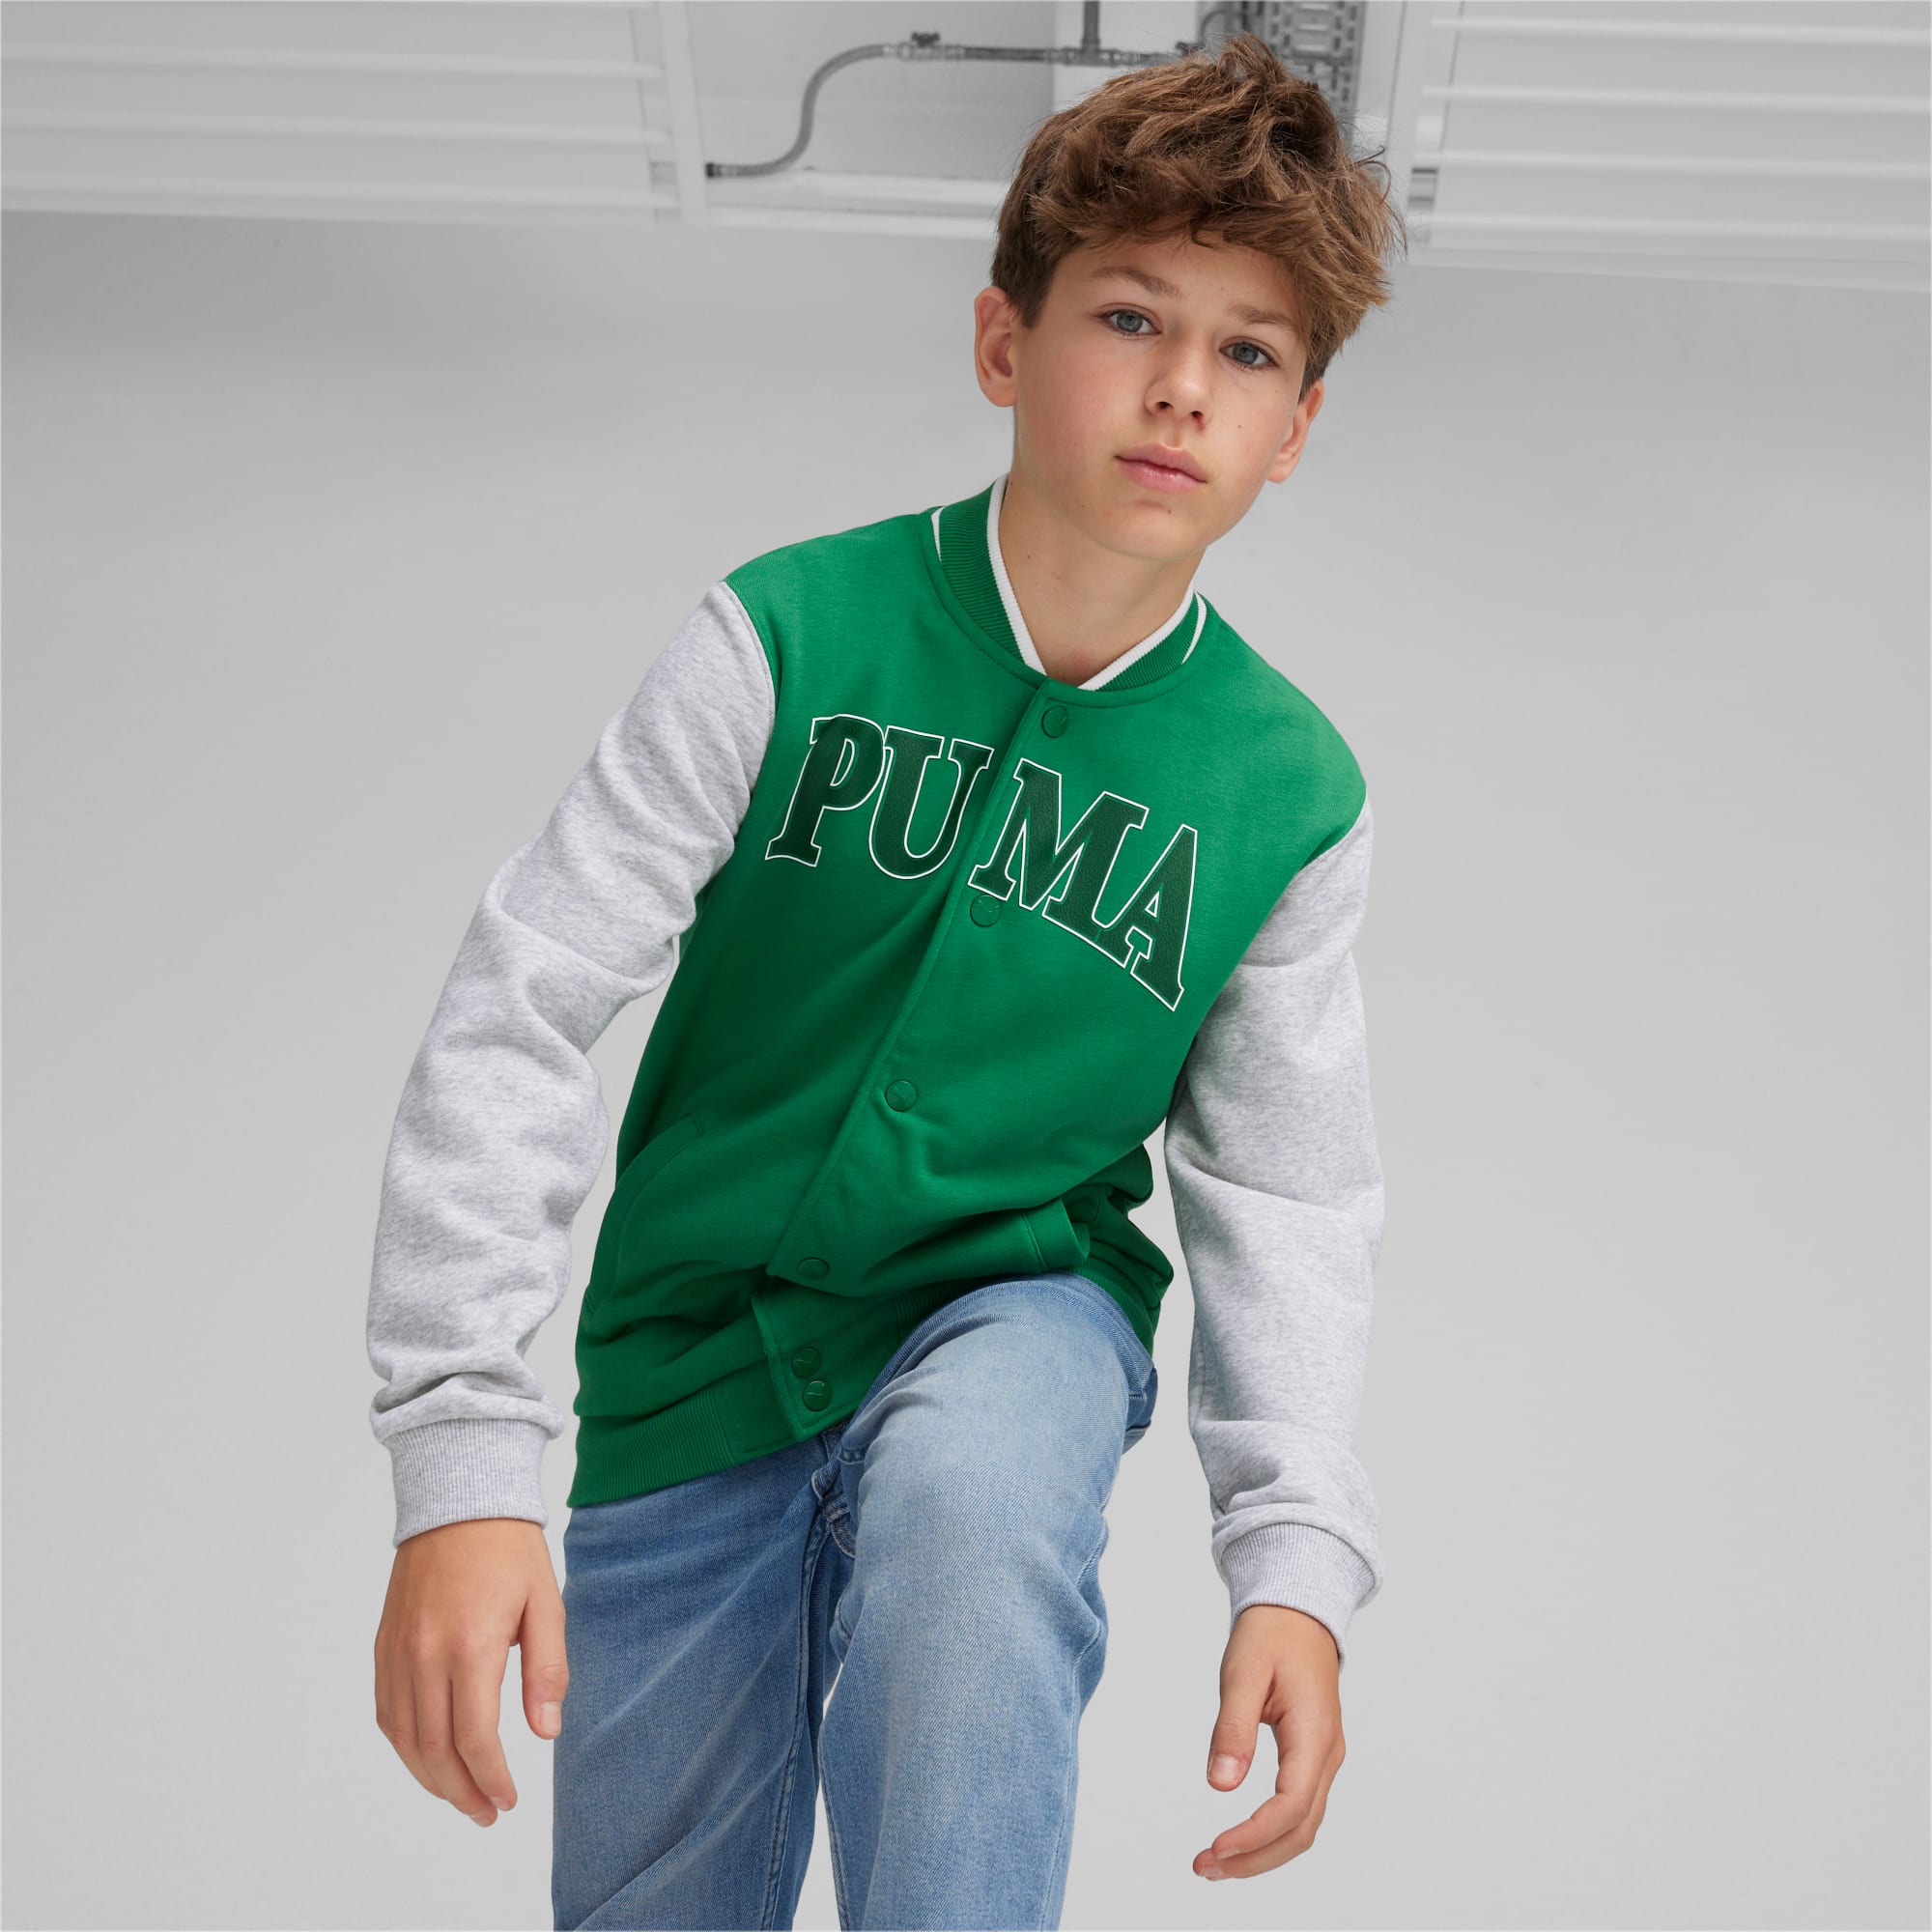 PUMA Squad Youth Bomber Jacket, Archive Green, Size 128, Clothing